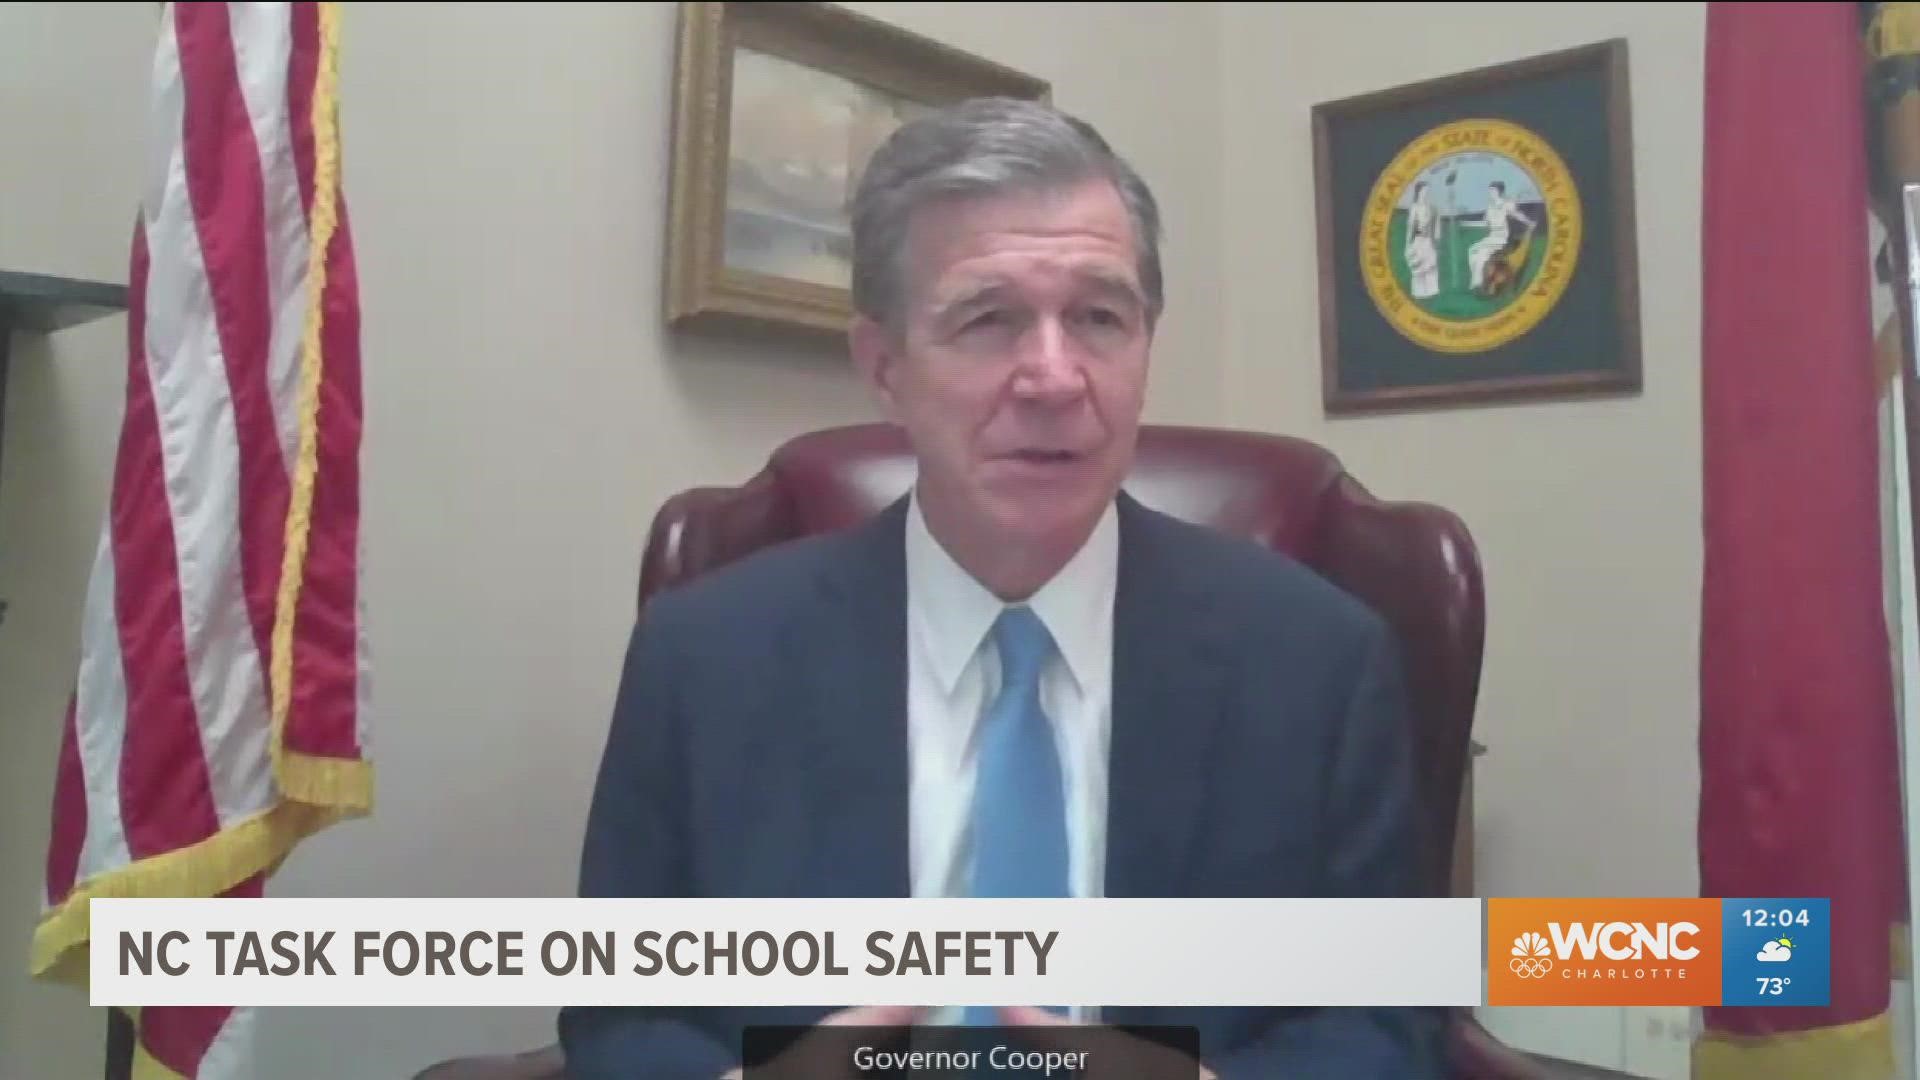 Gov. Cooper mentioned the concerns for gun violence in schools.